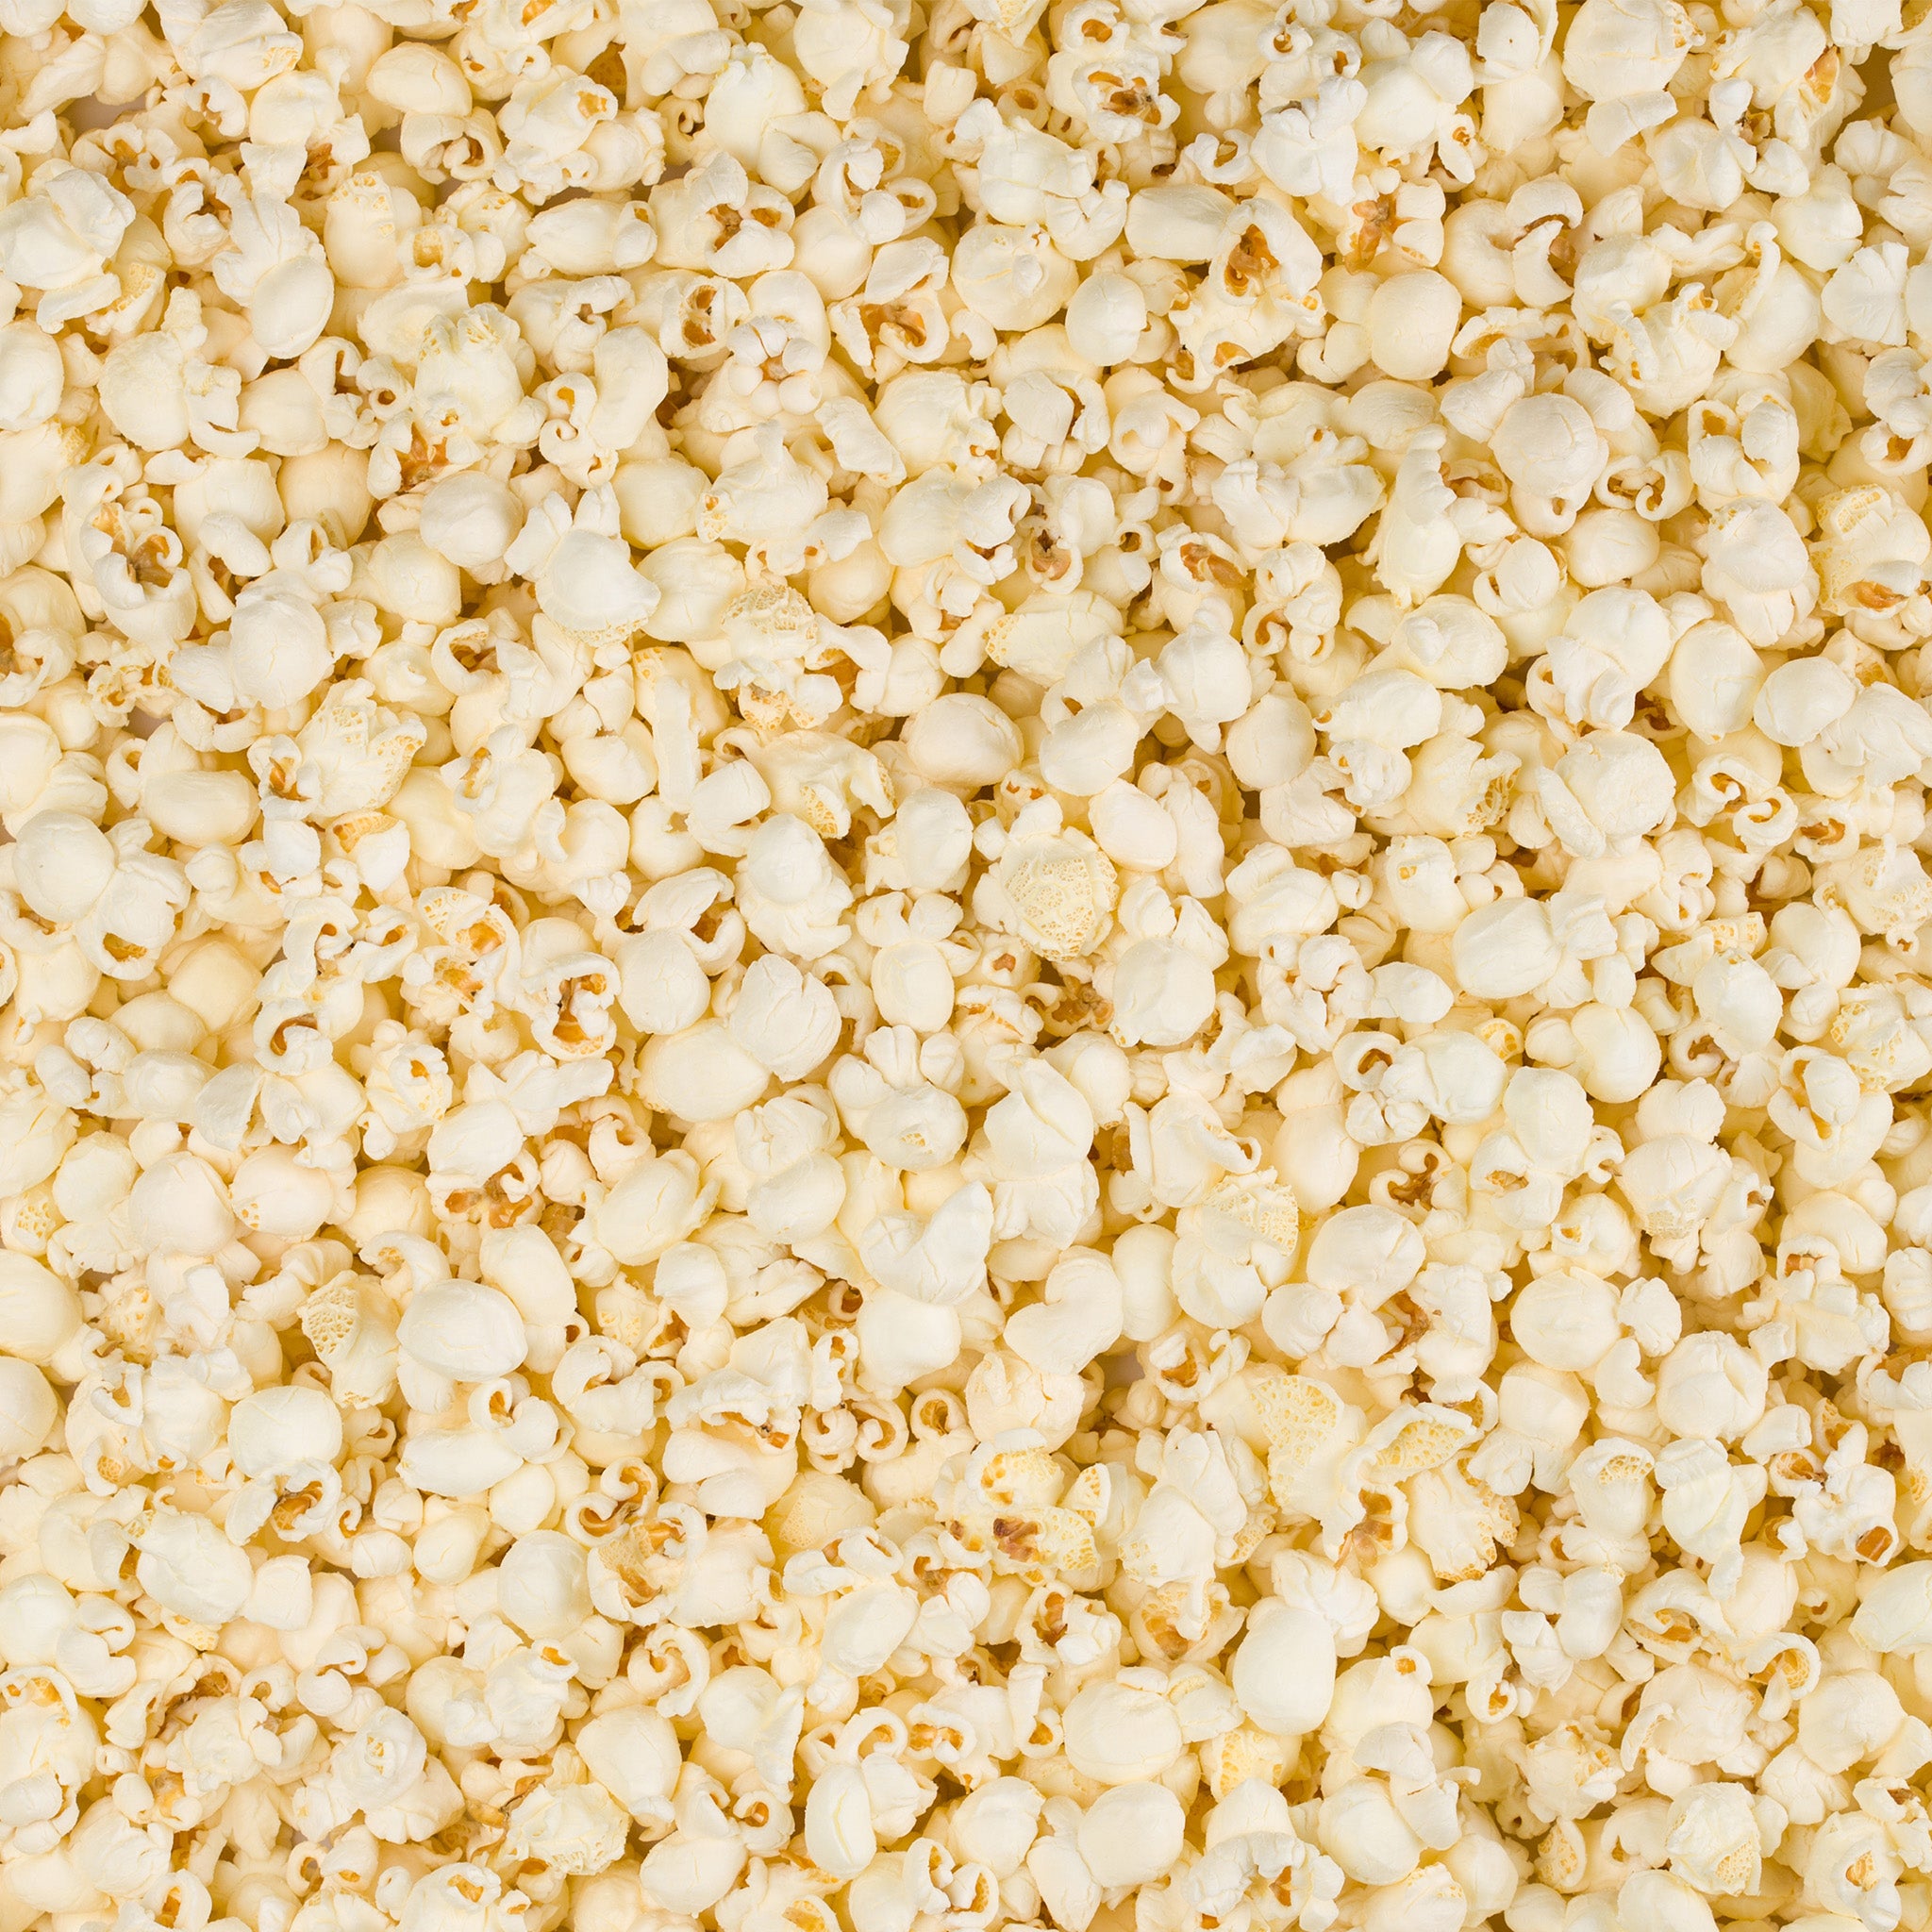 Ready-Made Sweet Popcorn 1kg